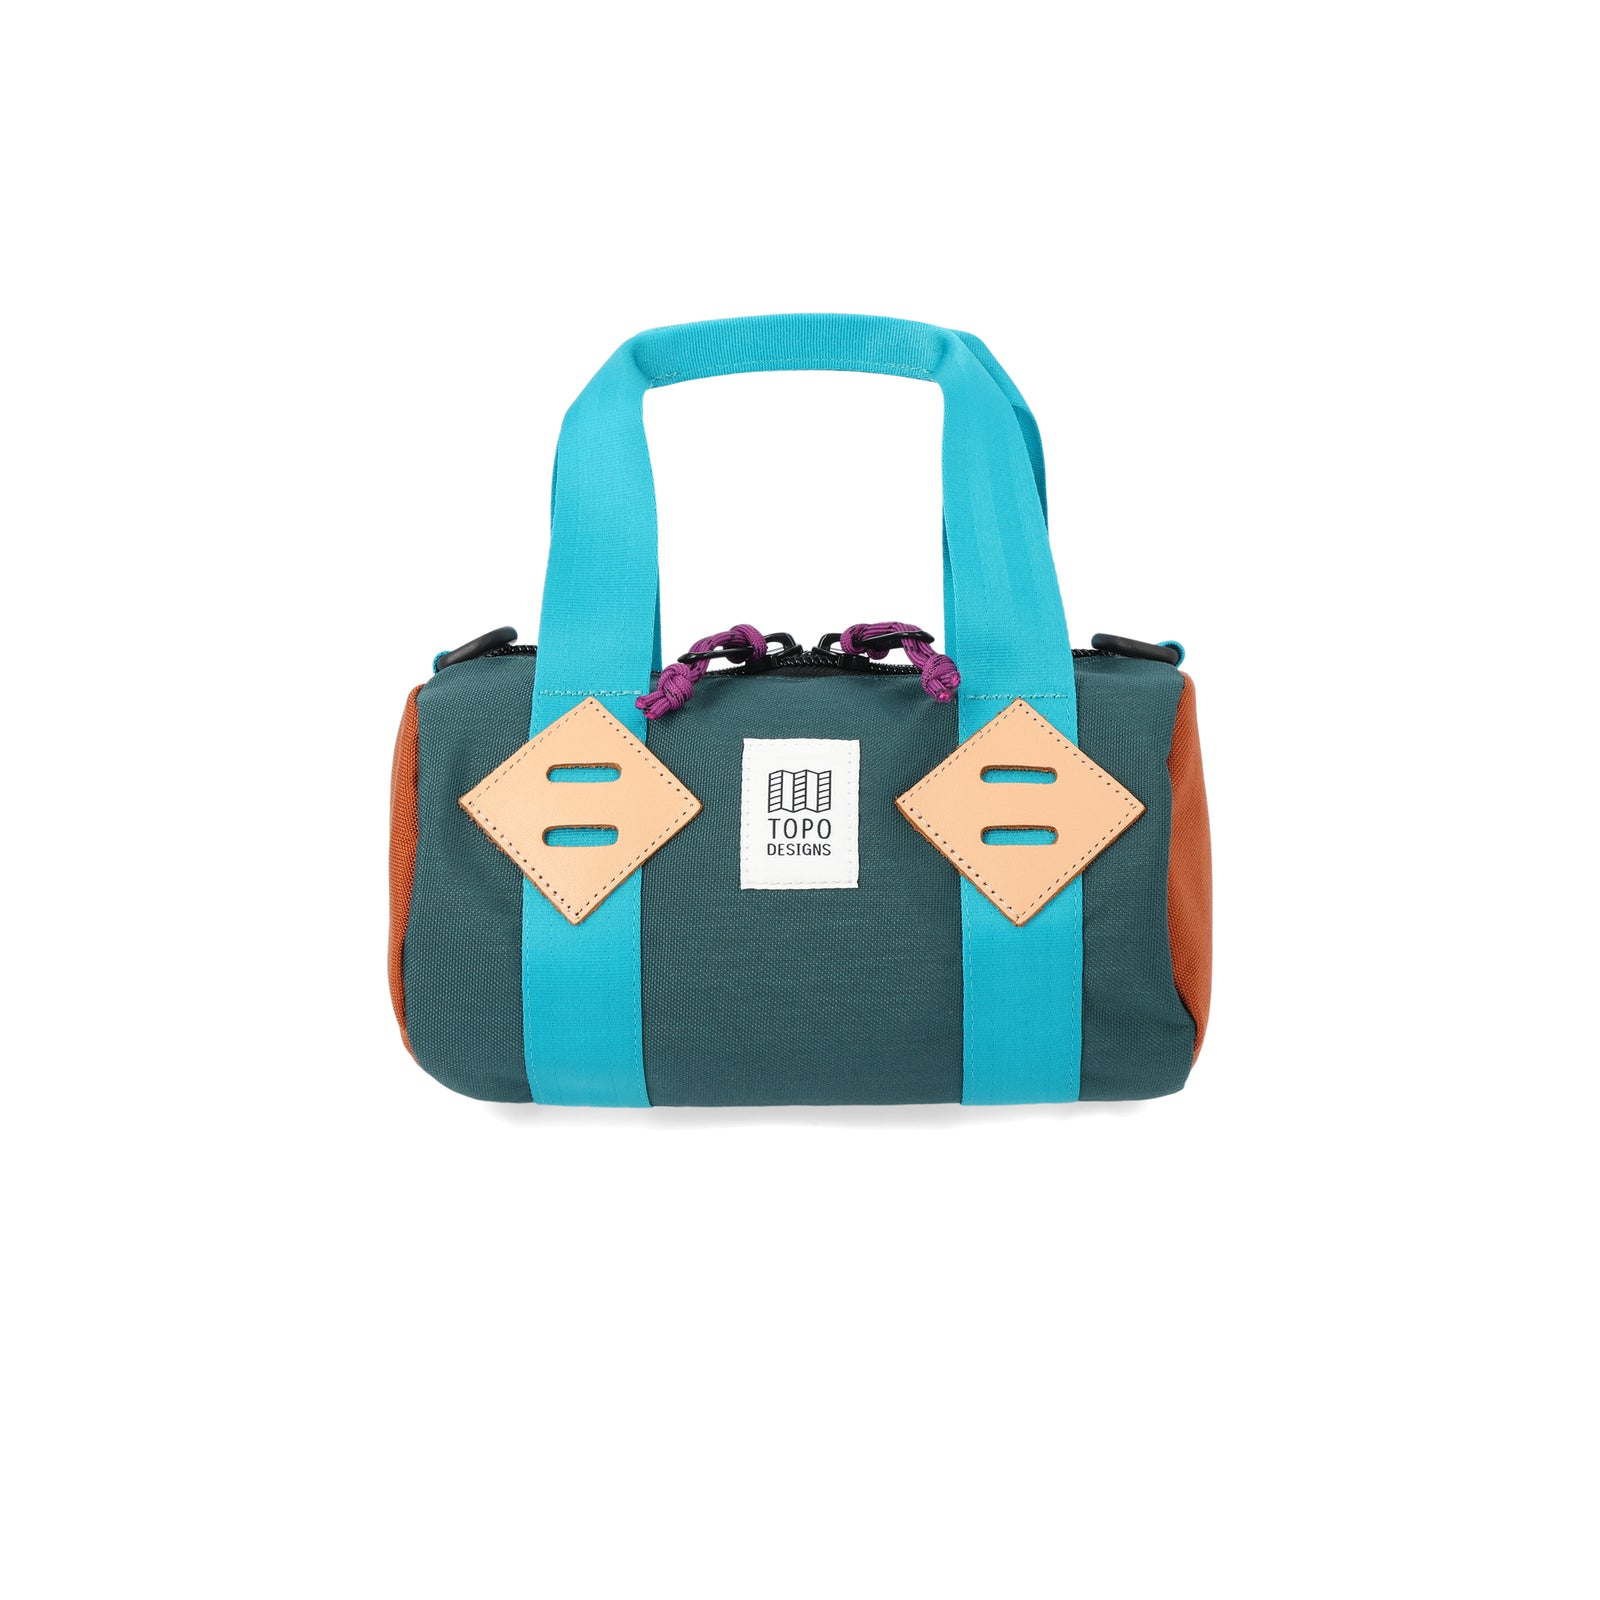 Topo Designs Mini Classic Duffel Bag shoulder crossbody purse in recycled "Botanic Green / Clay" nylon.